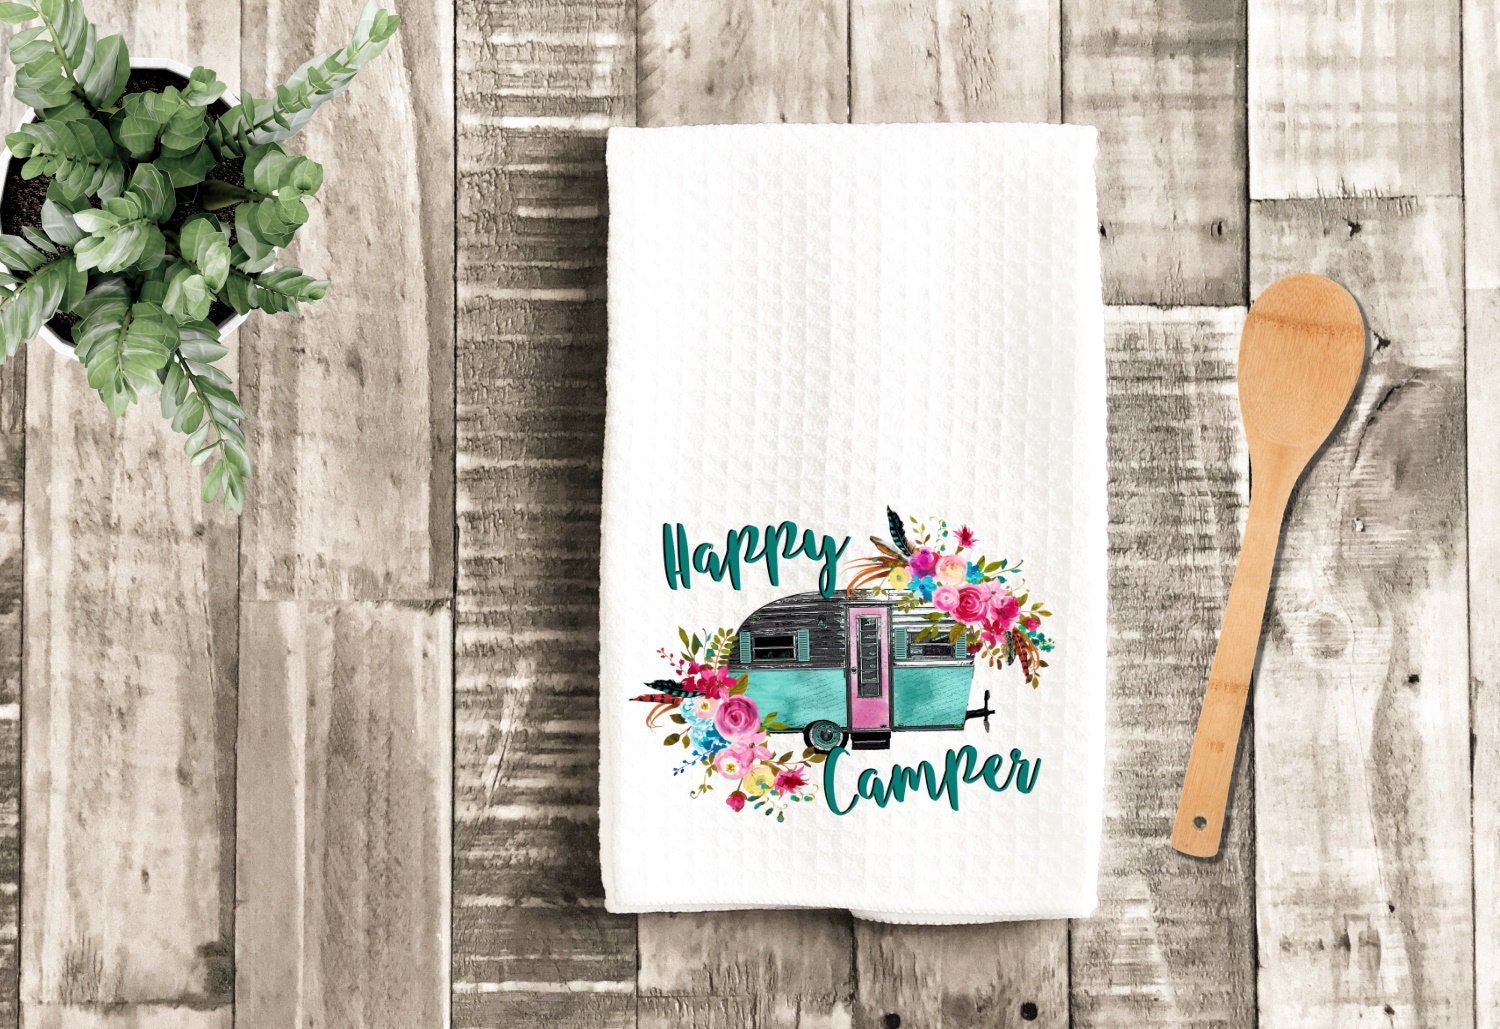 2 Camping Dish Towels Moose Hand Towel RV Camper Kitchen Dishcloth